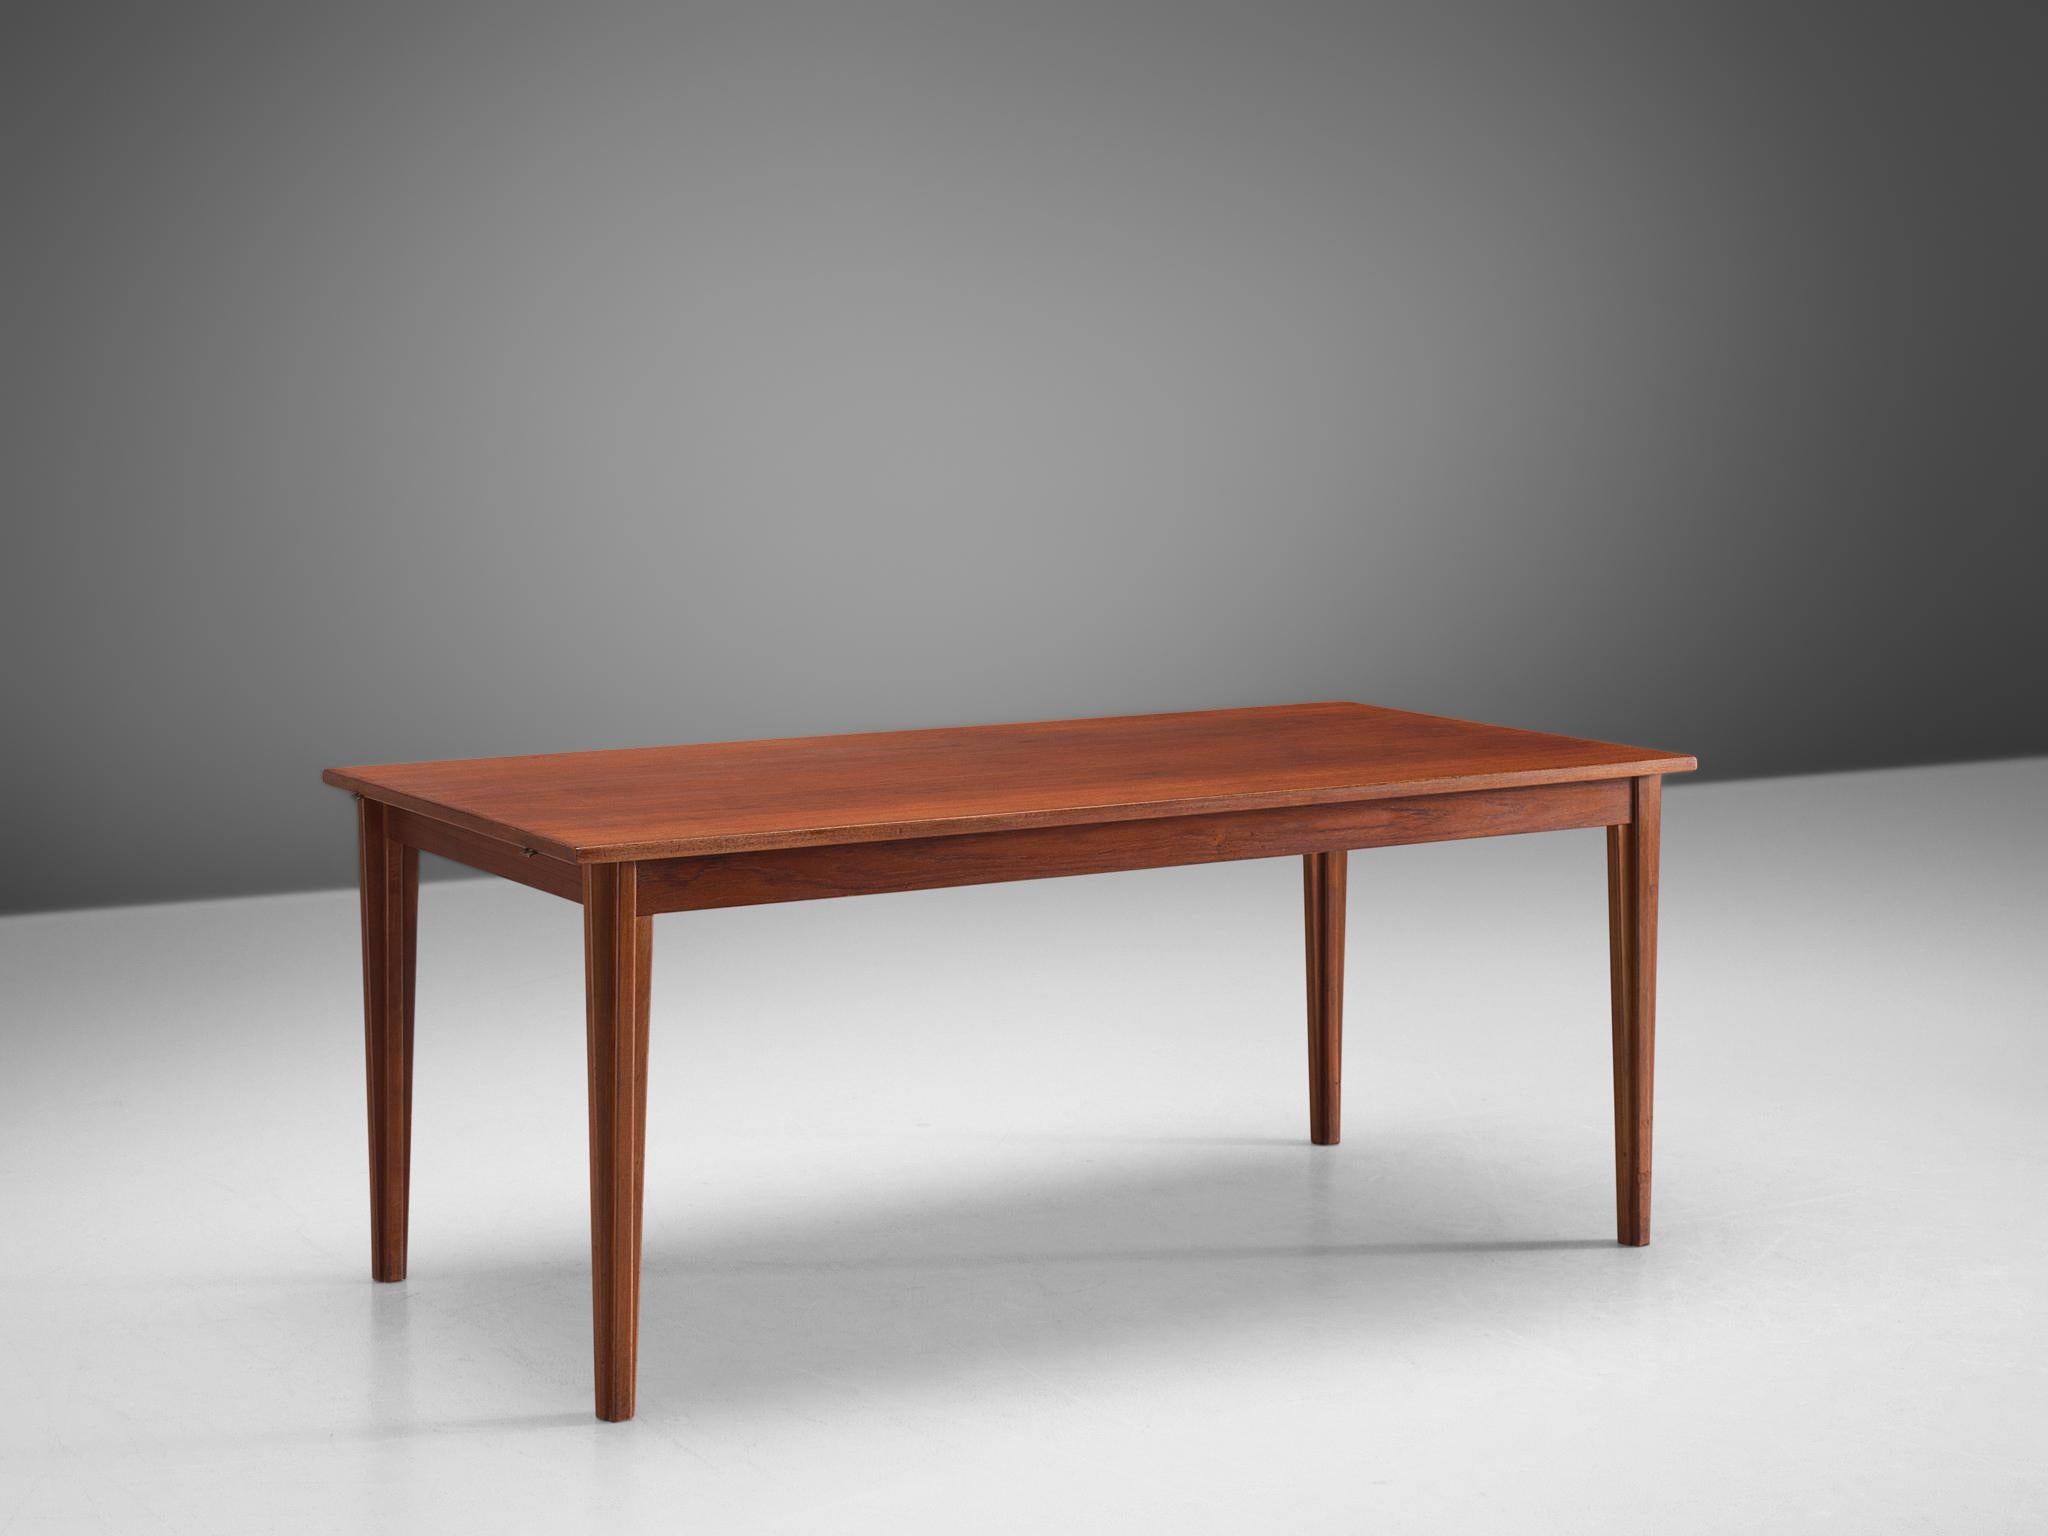 Wood Sleek Danish Dining Table with Rectangular Top in Teak For Sale